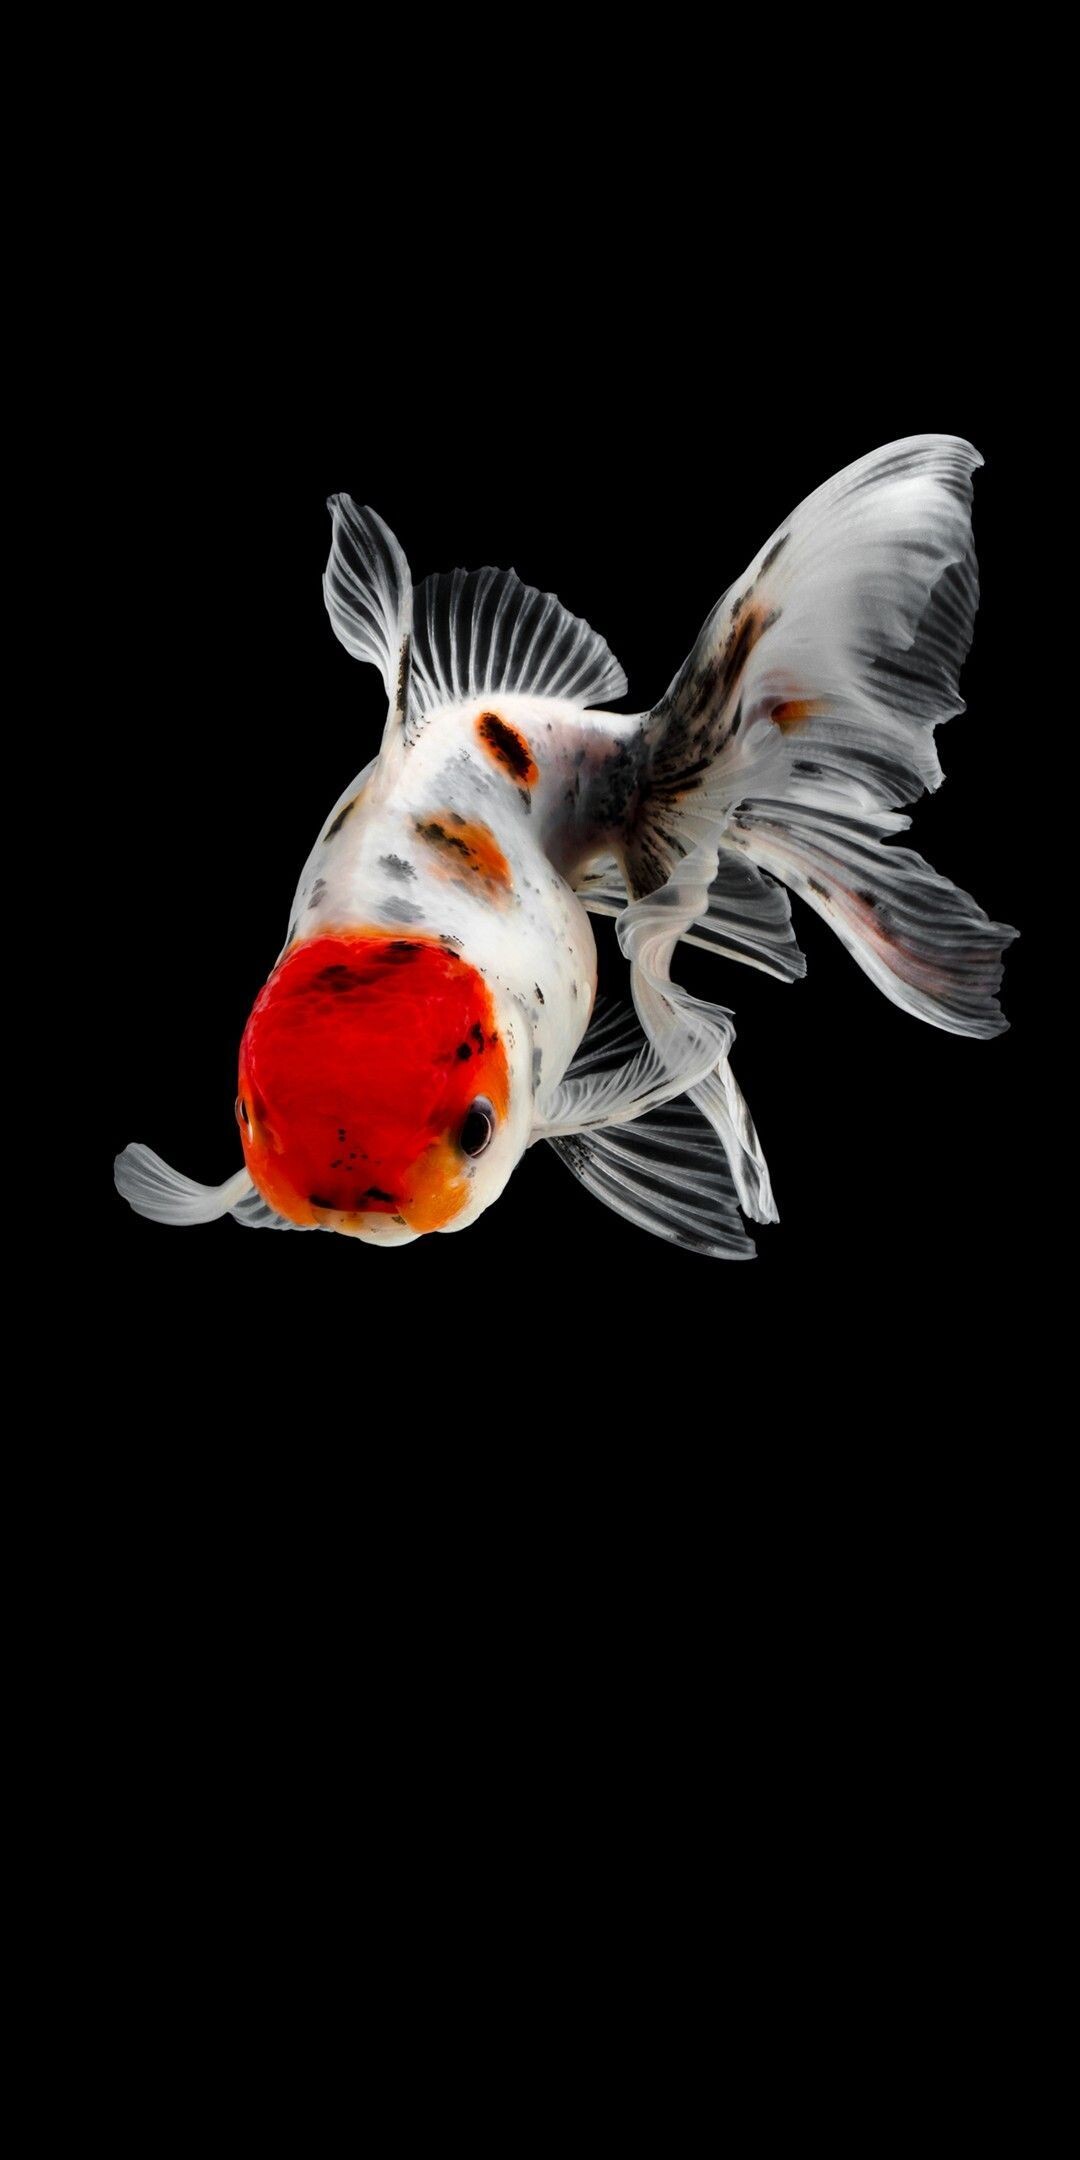 Gold Fish: Oranda, Bright-red head cap, Peaceful community fish, Calico pattern with several colors. 1080x2160 HD Wallpaper.